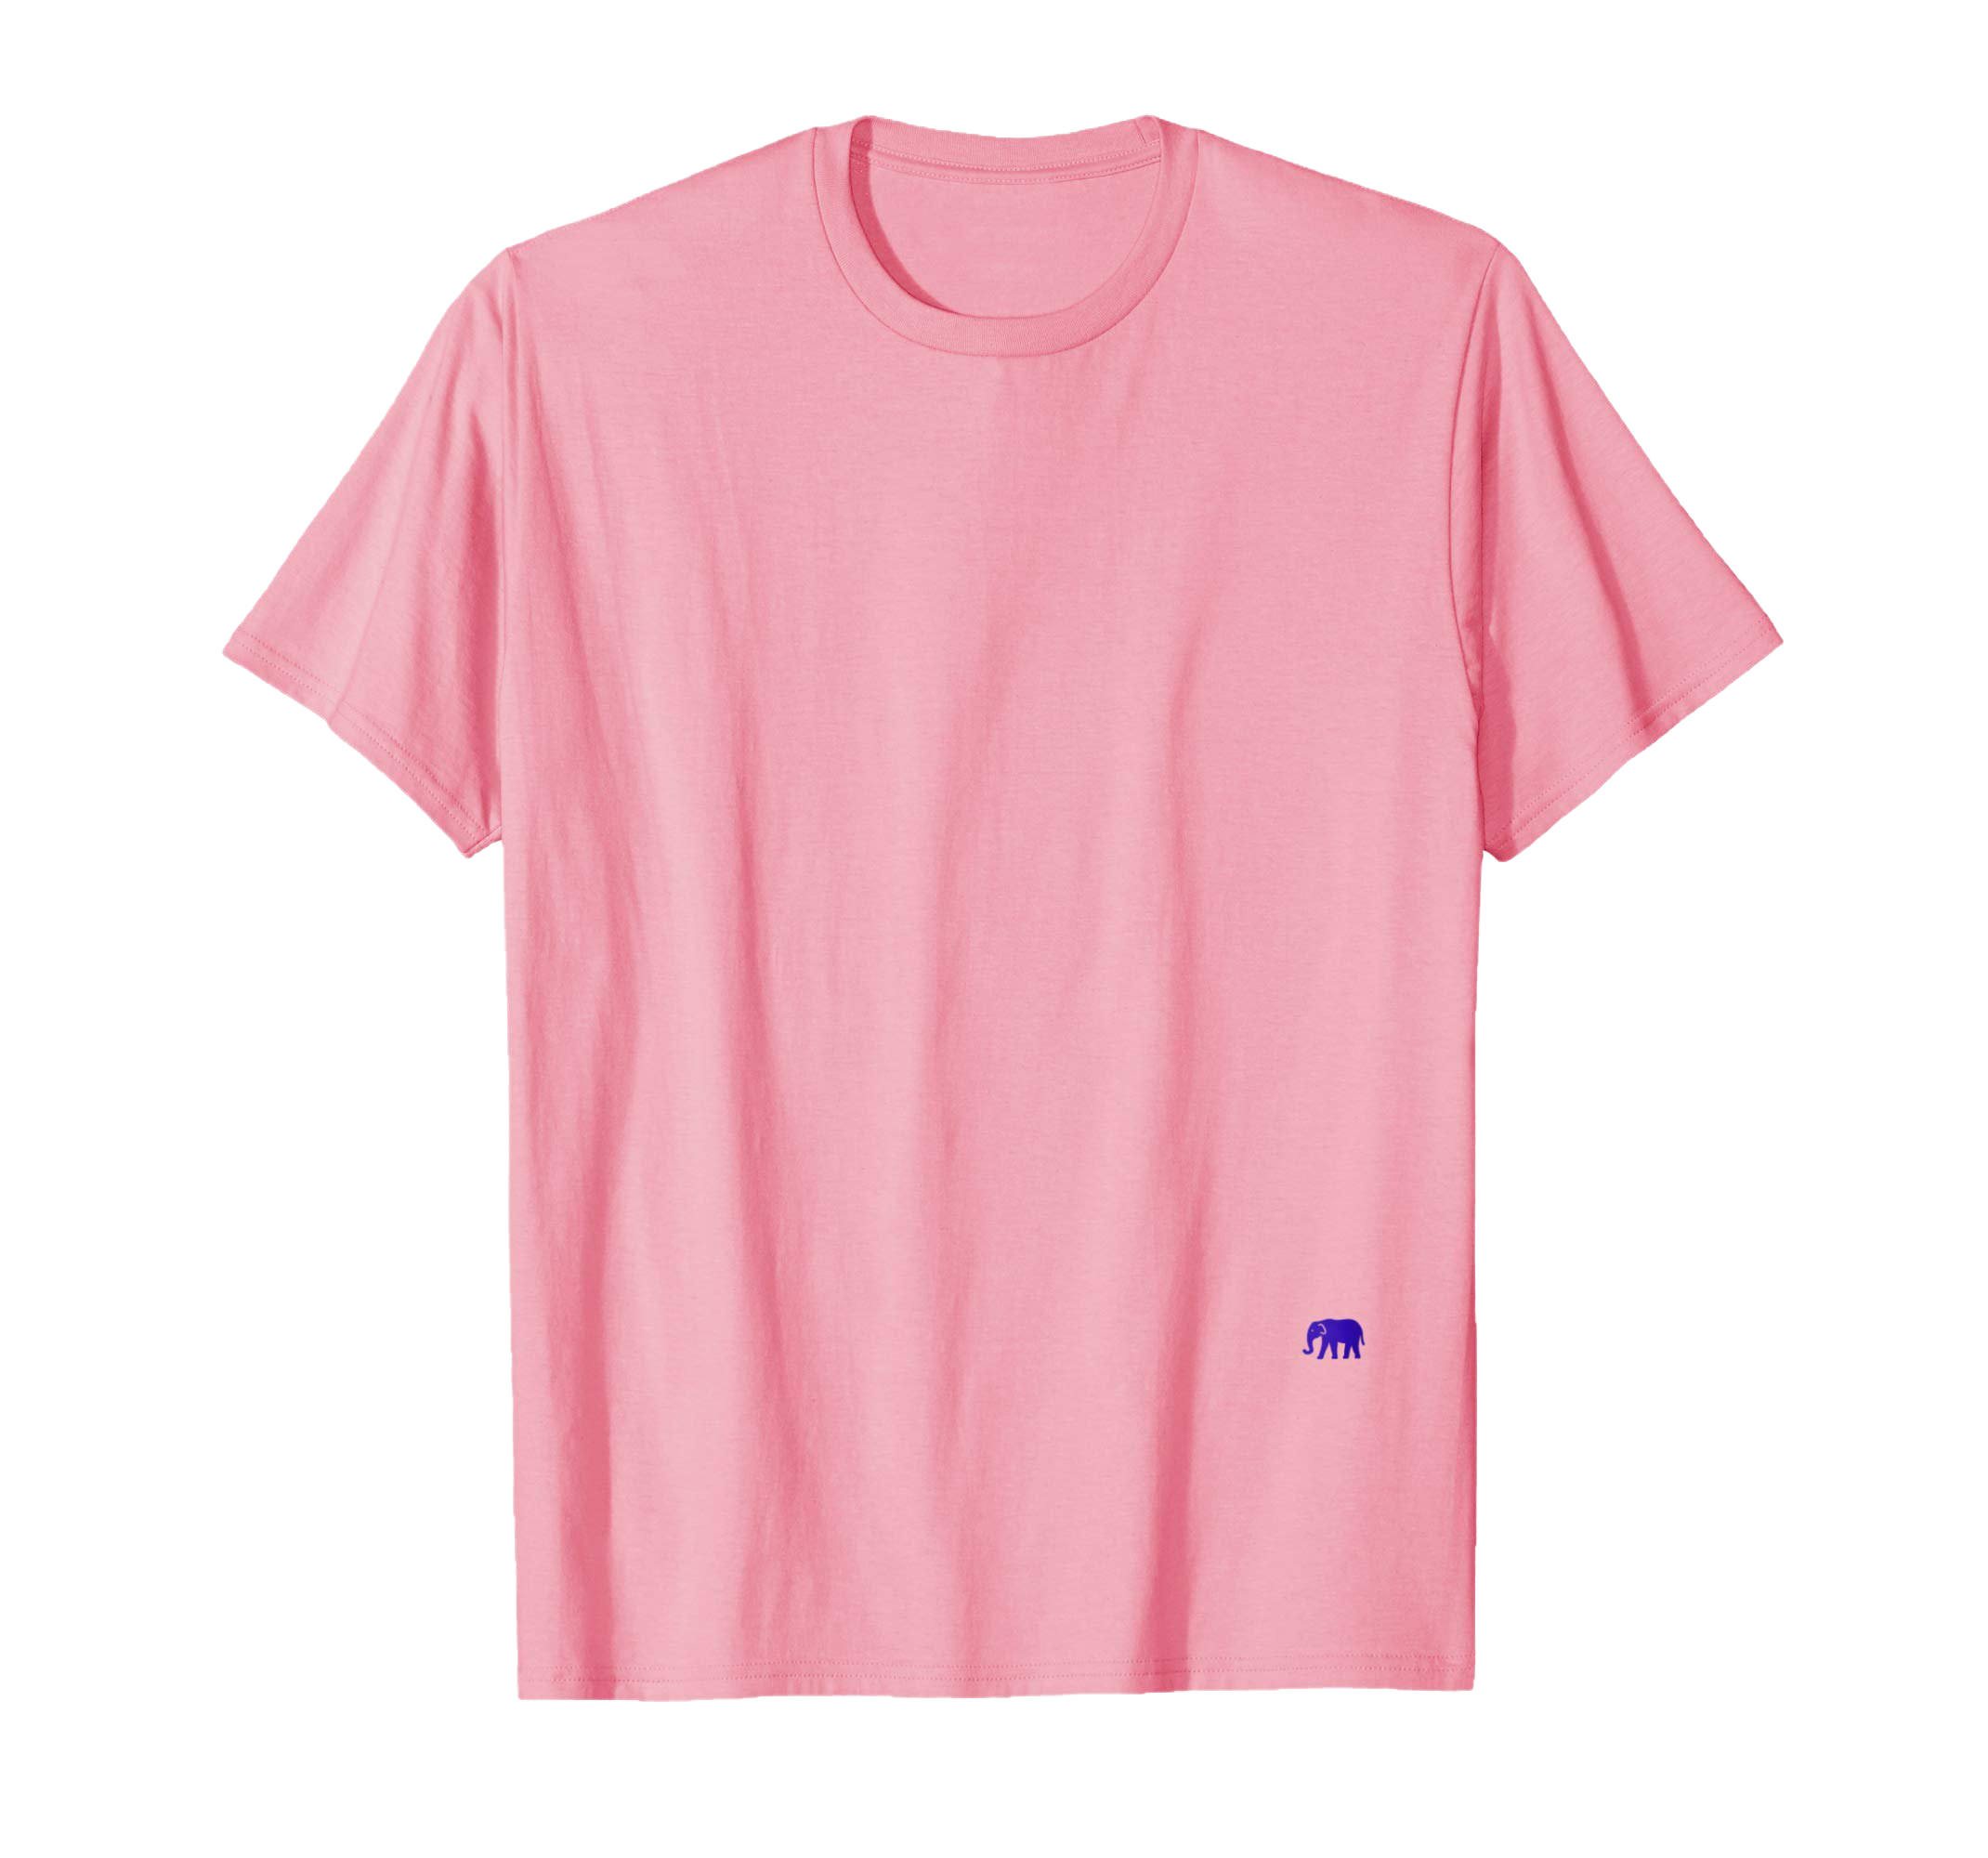 Camiseta rosa llano PNG photo